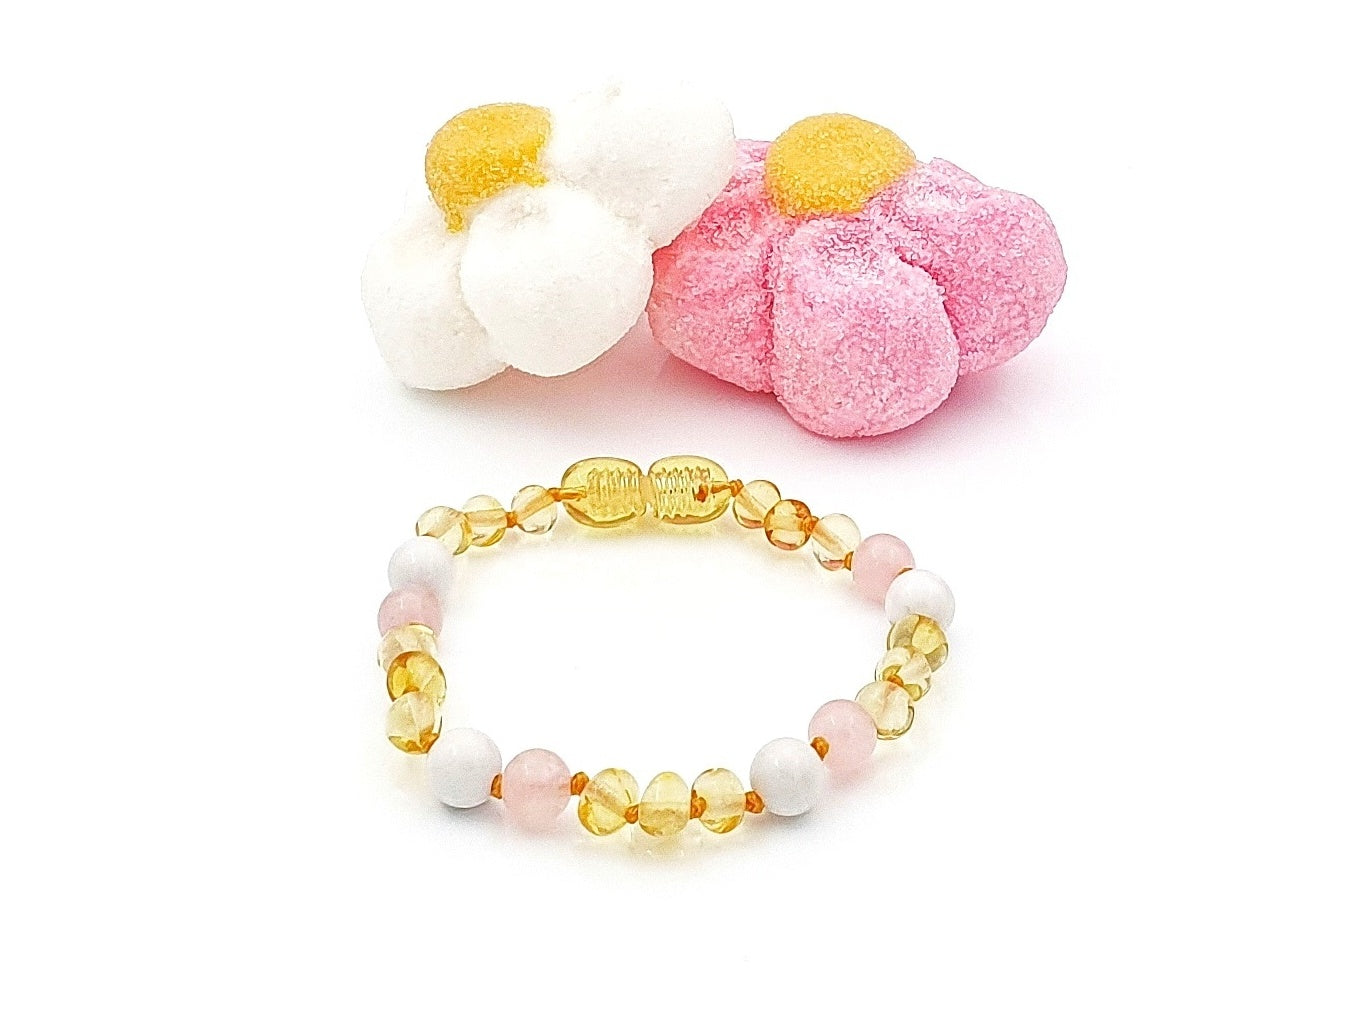 Amber baby bracelet with pink quartz